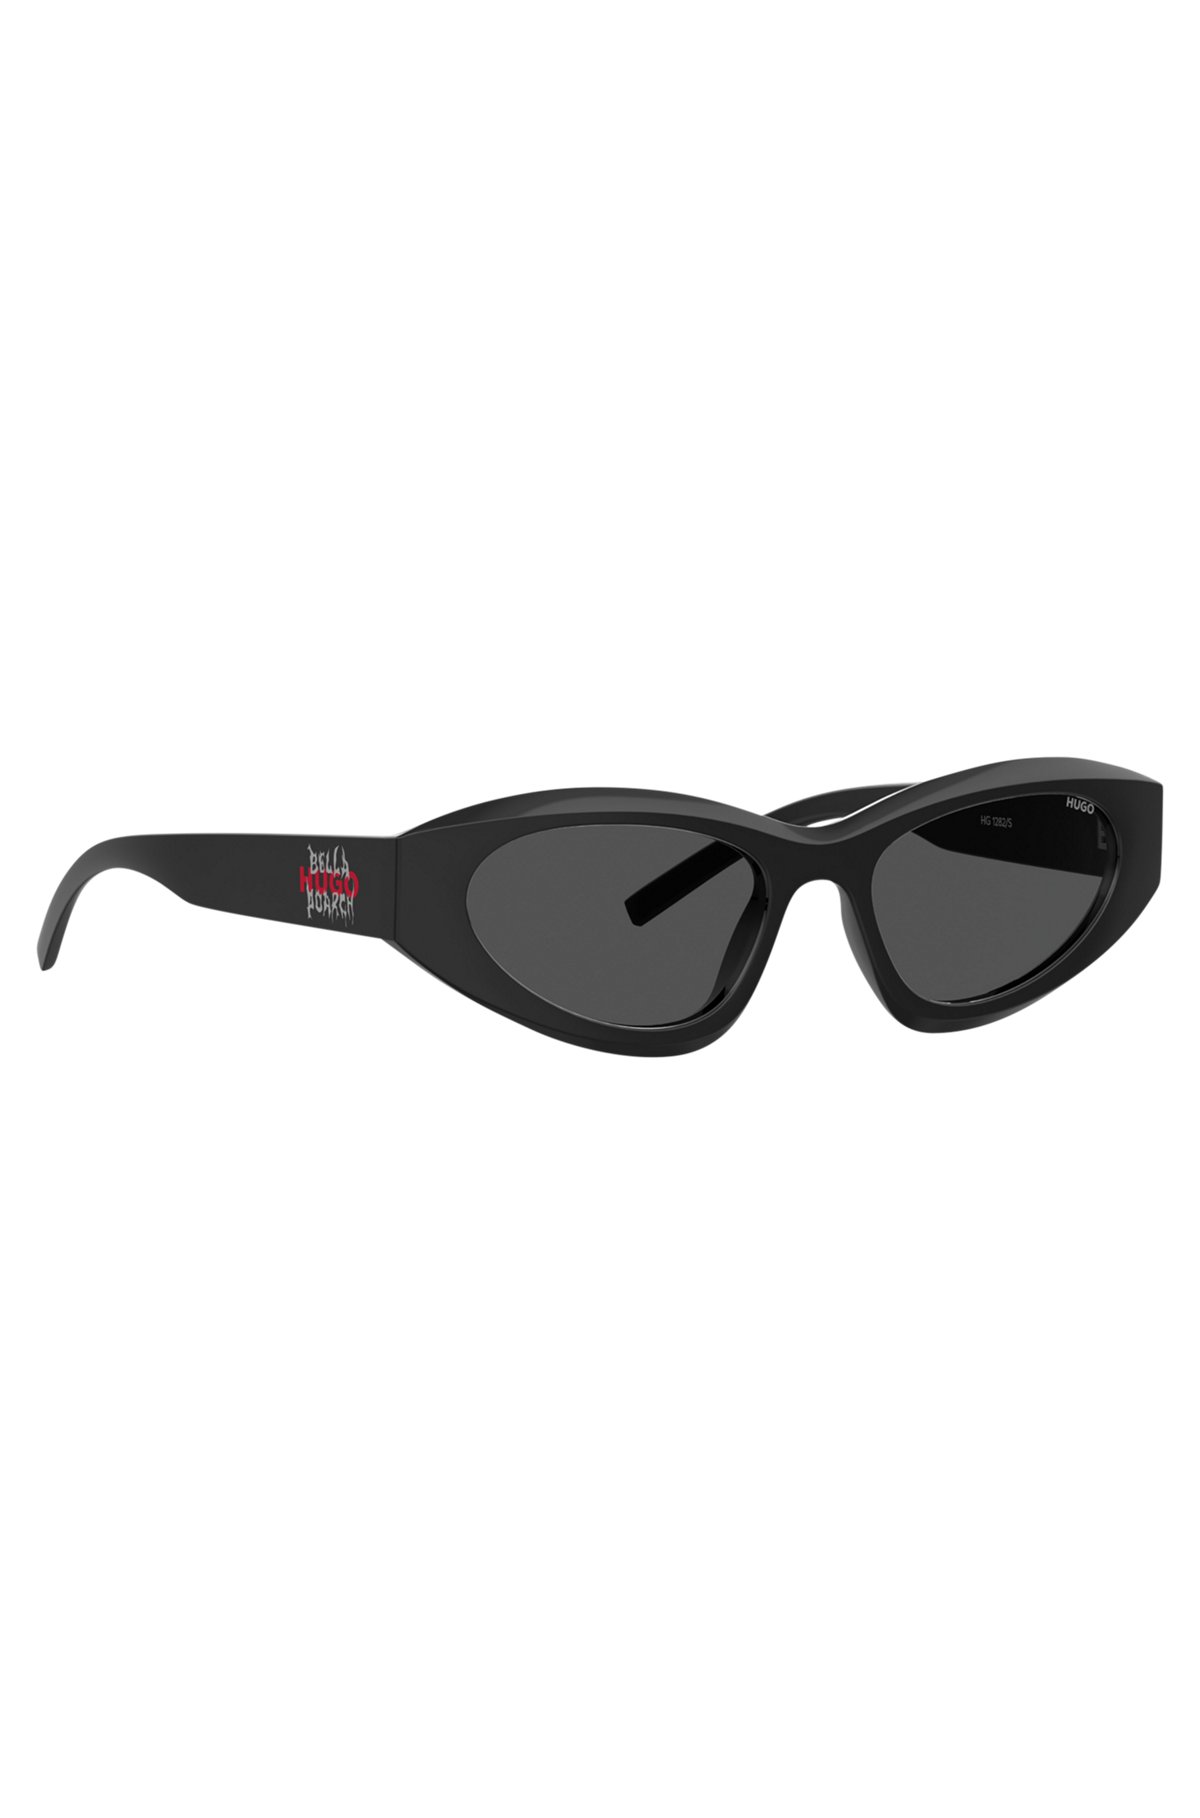 HUGO x Bella Poarch black sunglasses with special branding, Black